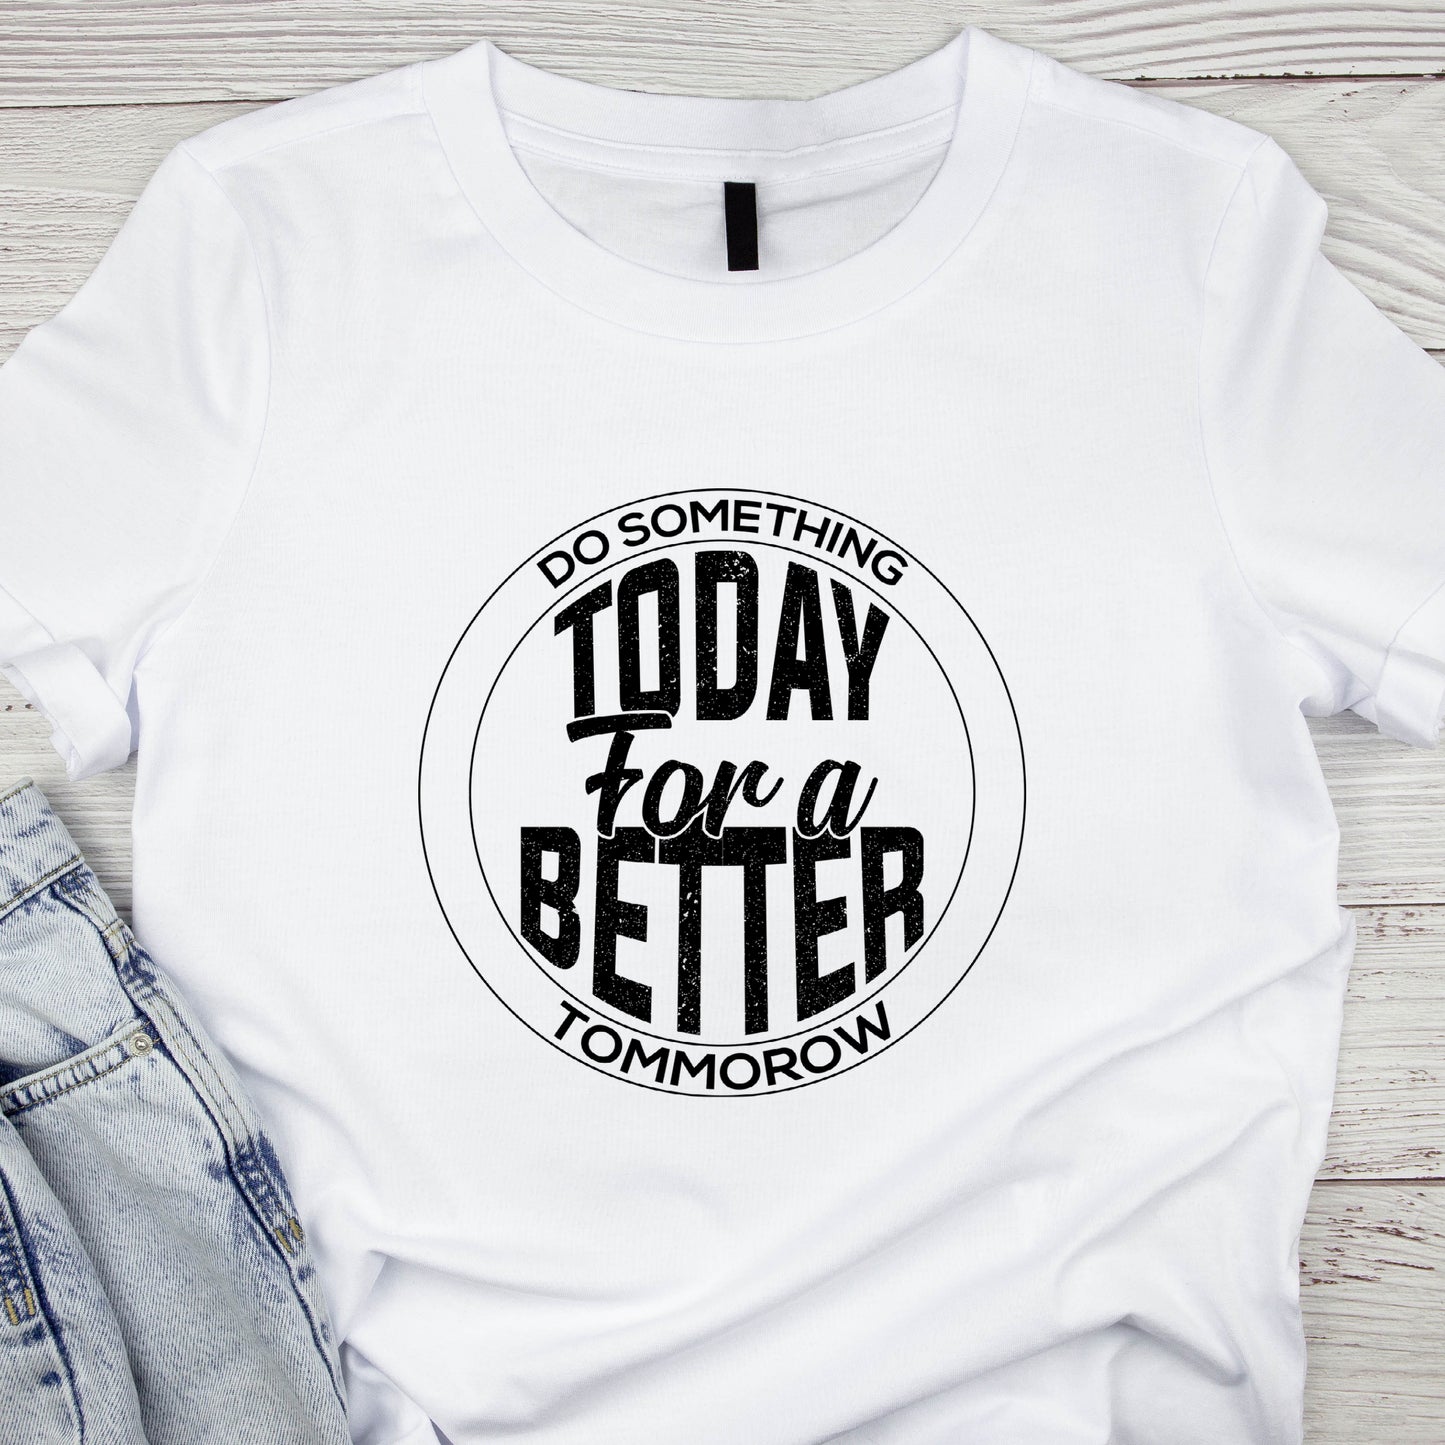 Inspirational T-Shirt For Motivational TShirt For Betterment T Shirt For Do Good Shirt For Better Tomorrow Shirt